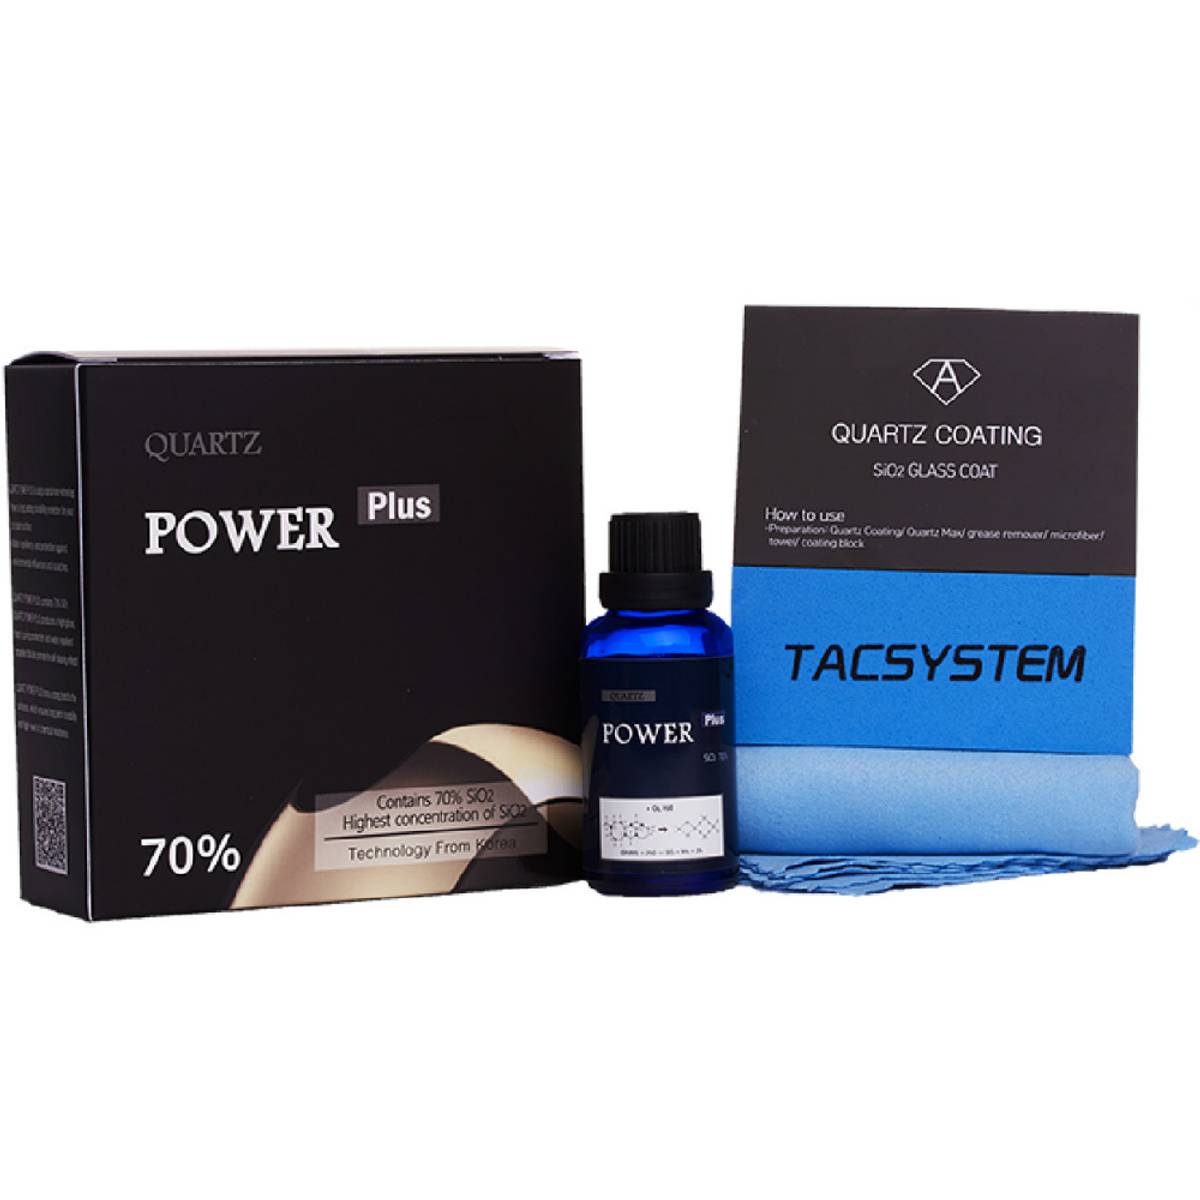 Tacsystem - Quartz Power Plus Coating